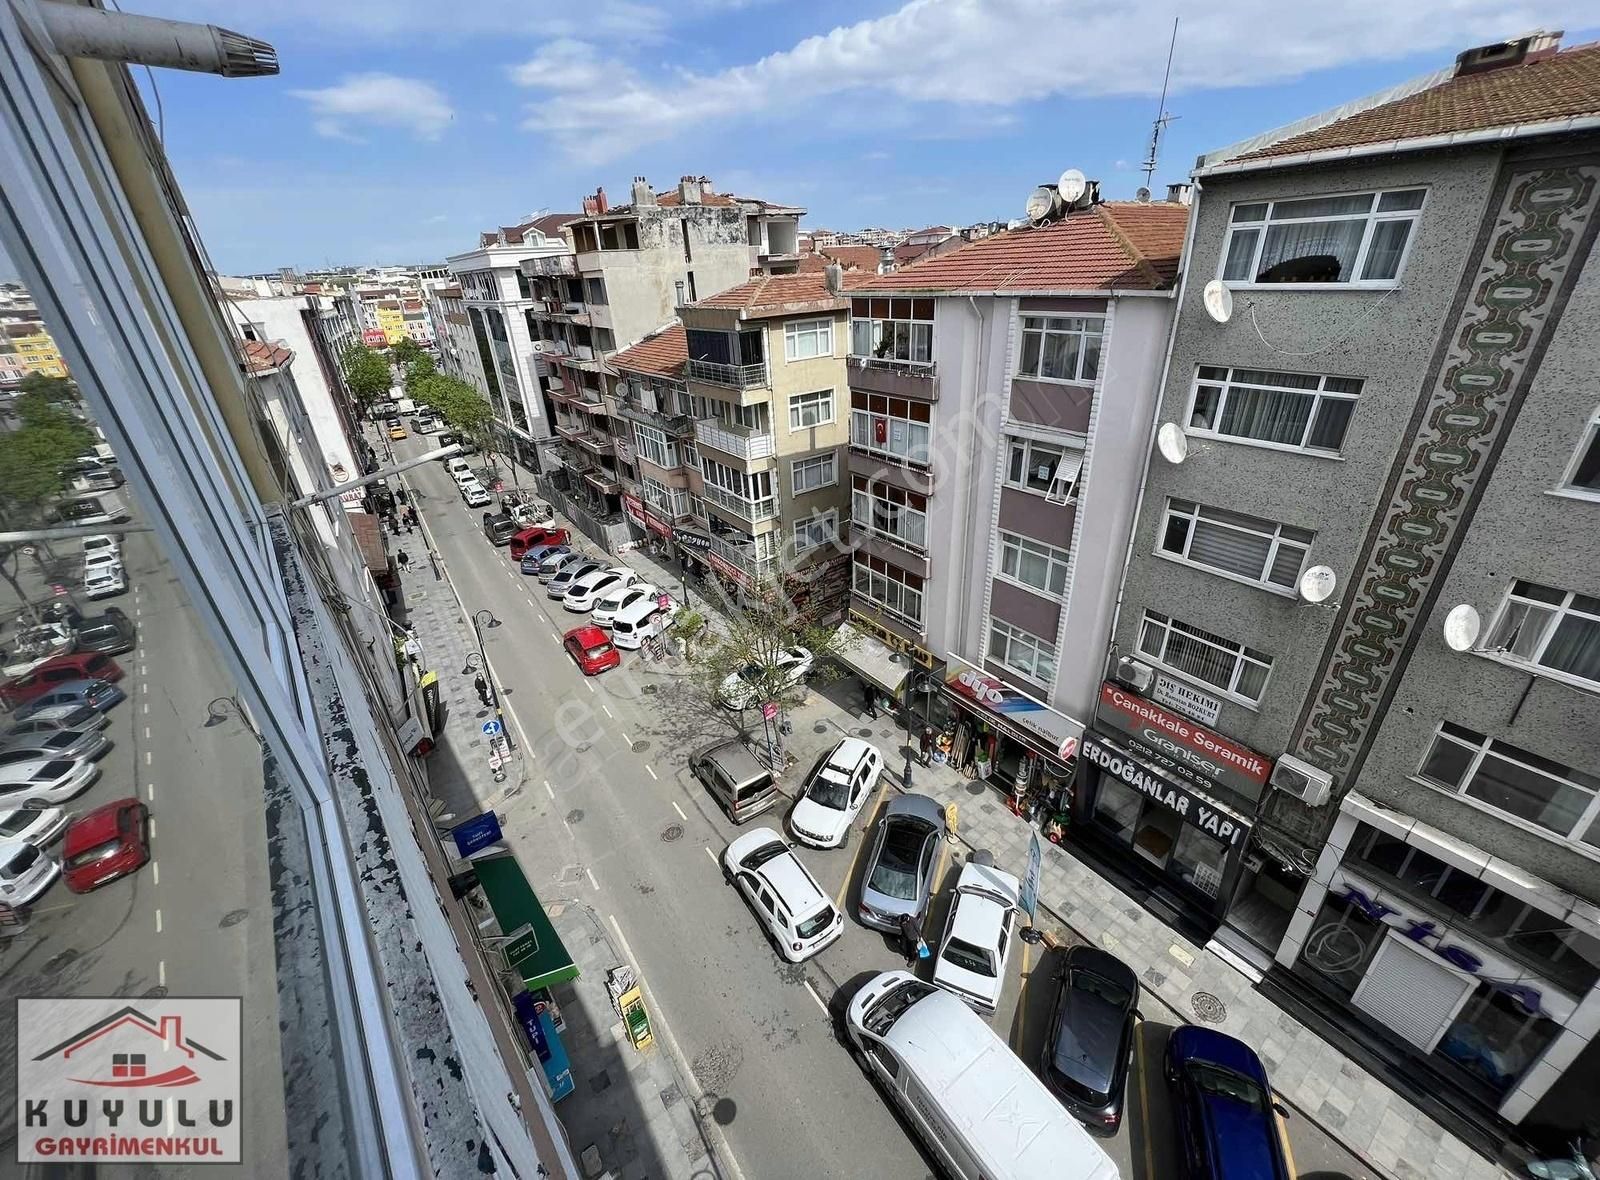 Silivri Piri Mehmet Paşa Kiralık Daire Silivri Çarşı merkezde geniş 2+1 daire